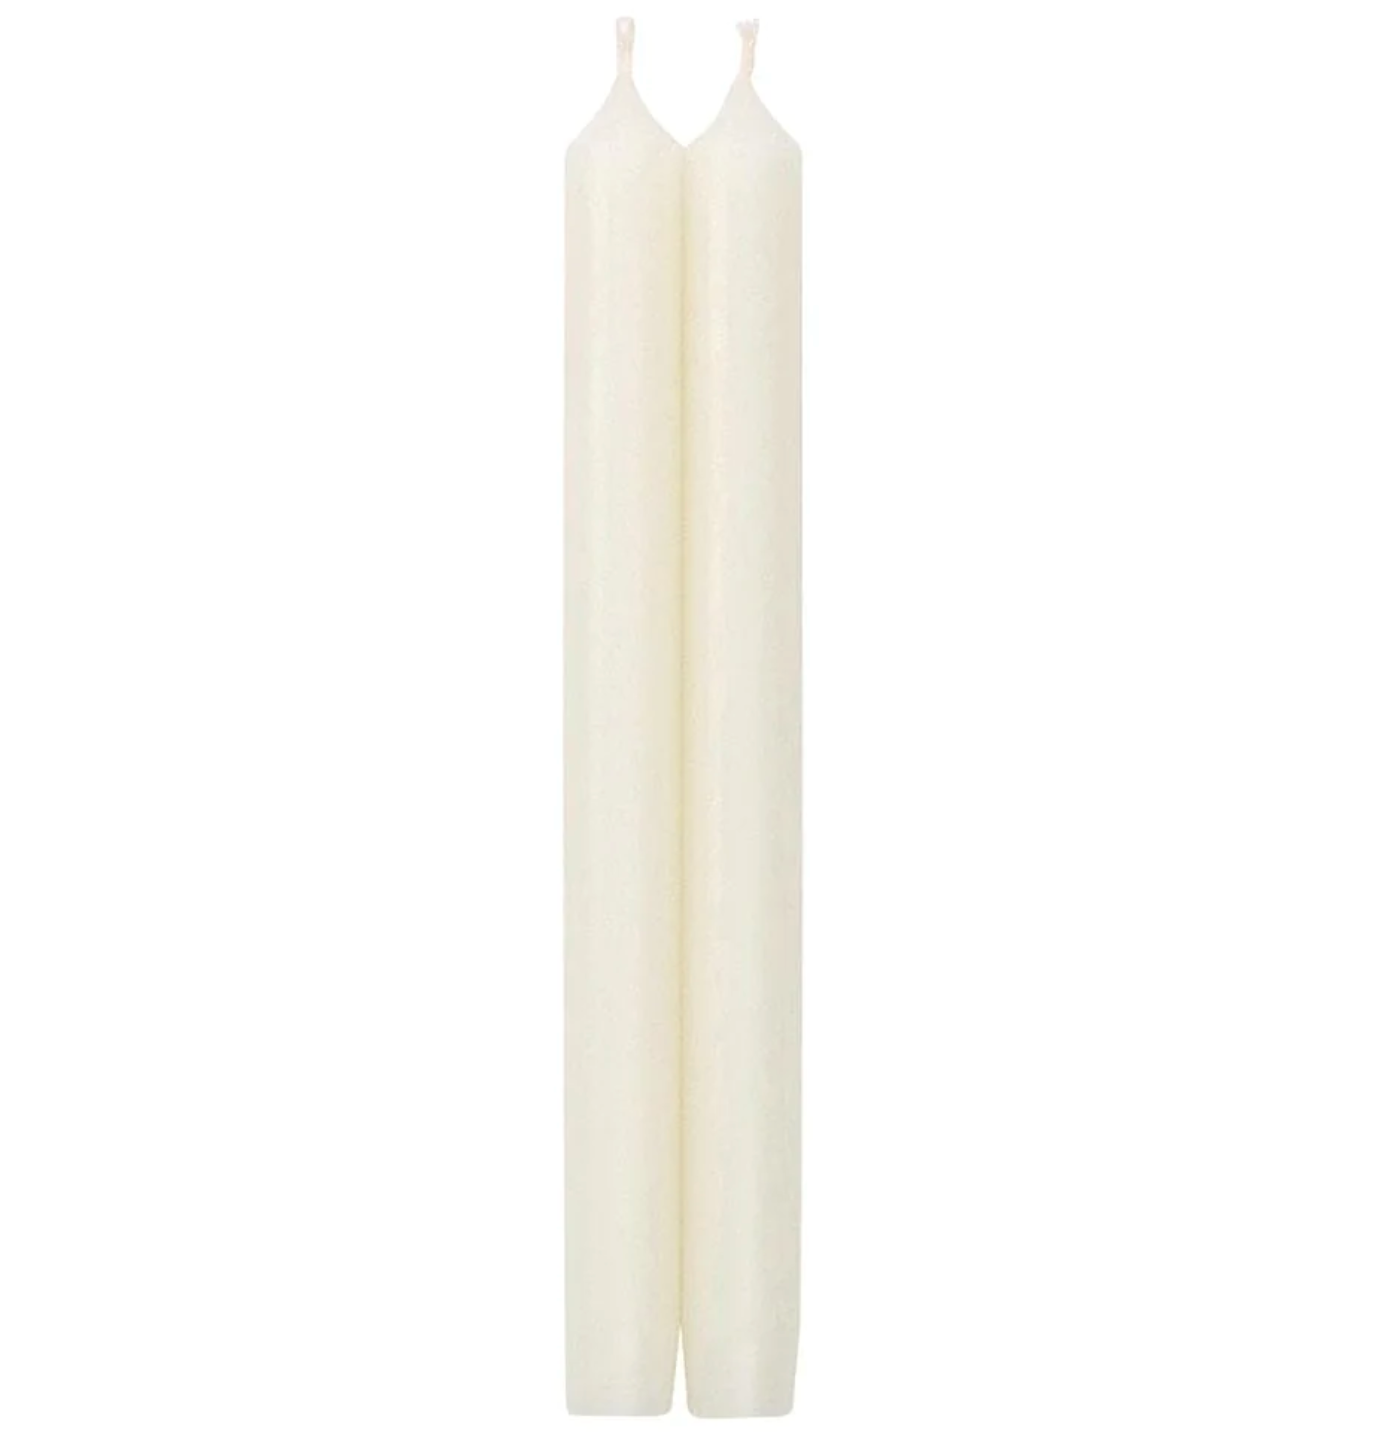 Caspari Tapered Candles in White – 12inch – 2pk